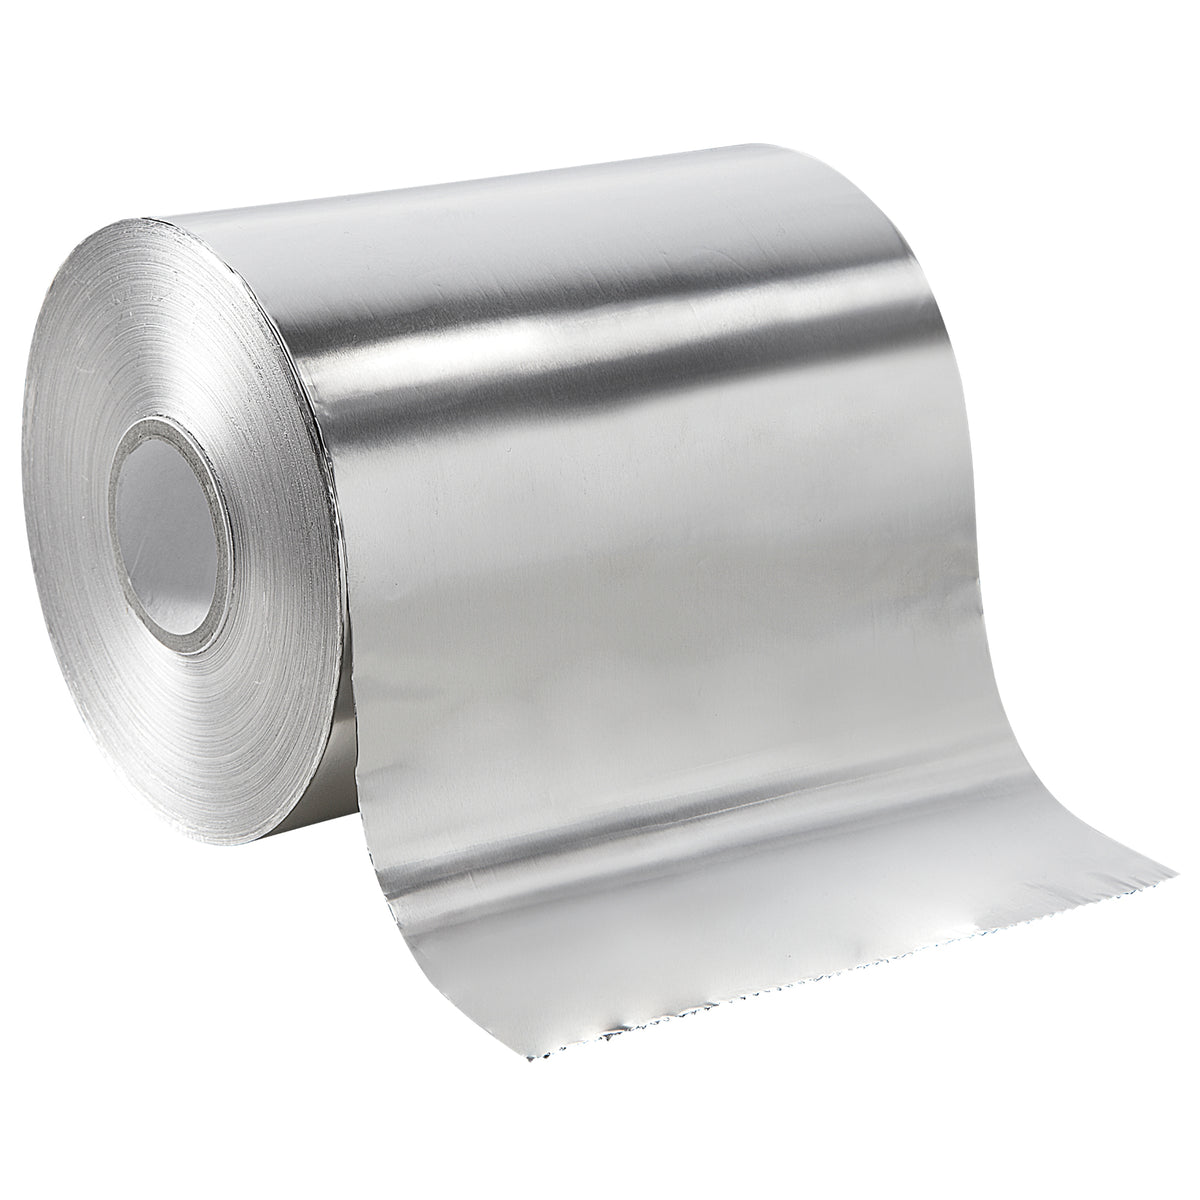 BaBylissPRO Aluminum Coloring Foil Roll, 1528 Feet